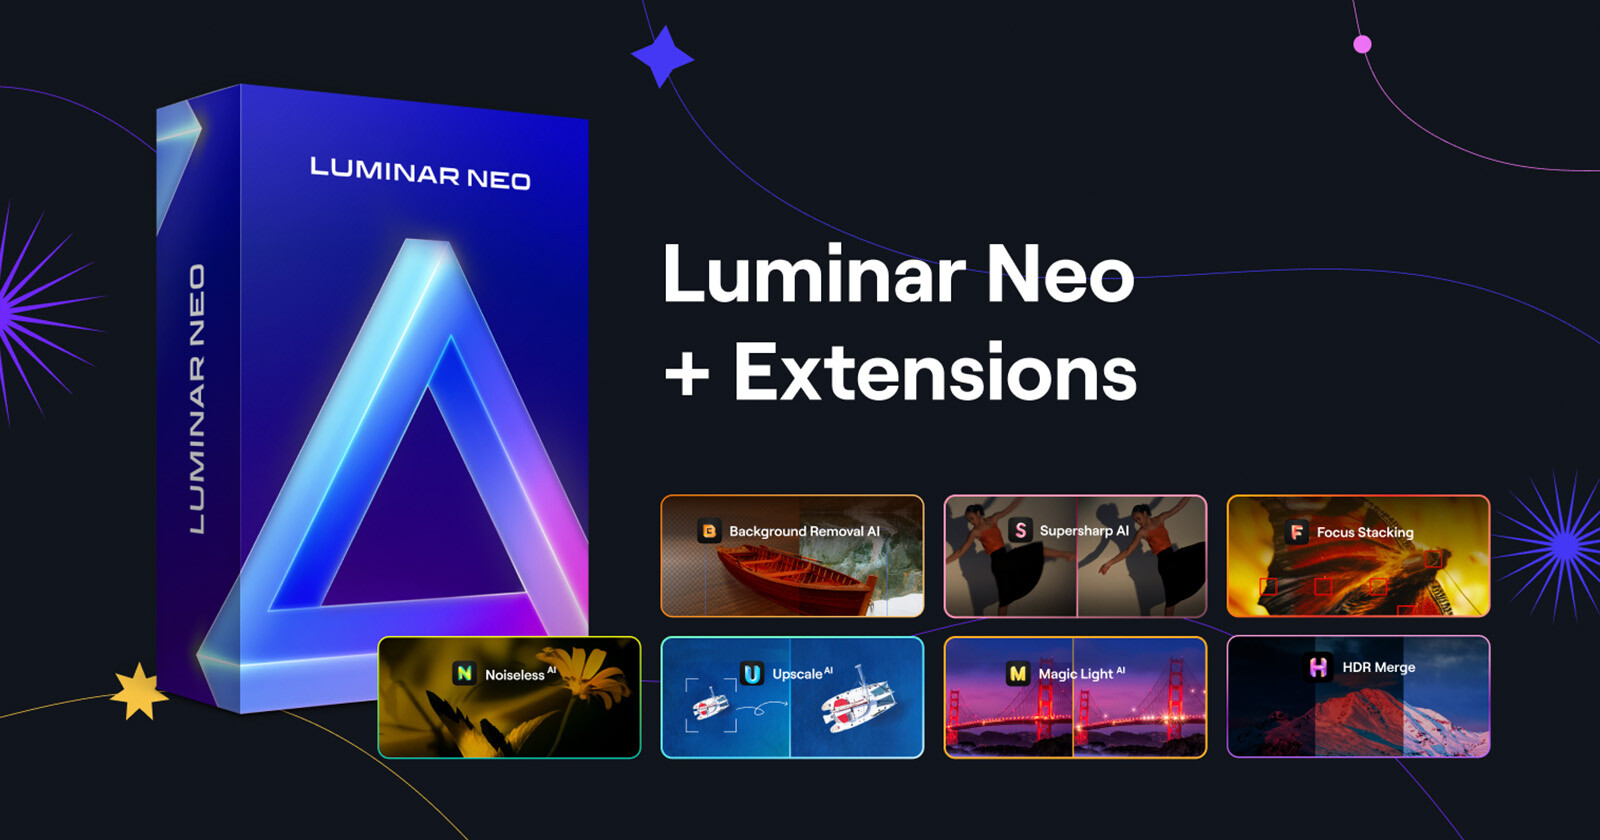  luminar neo update adds undo redo feature 